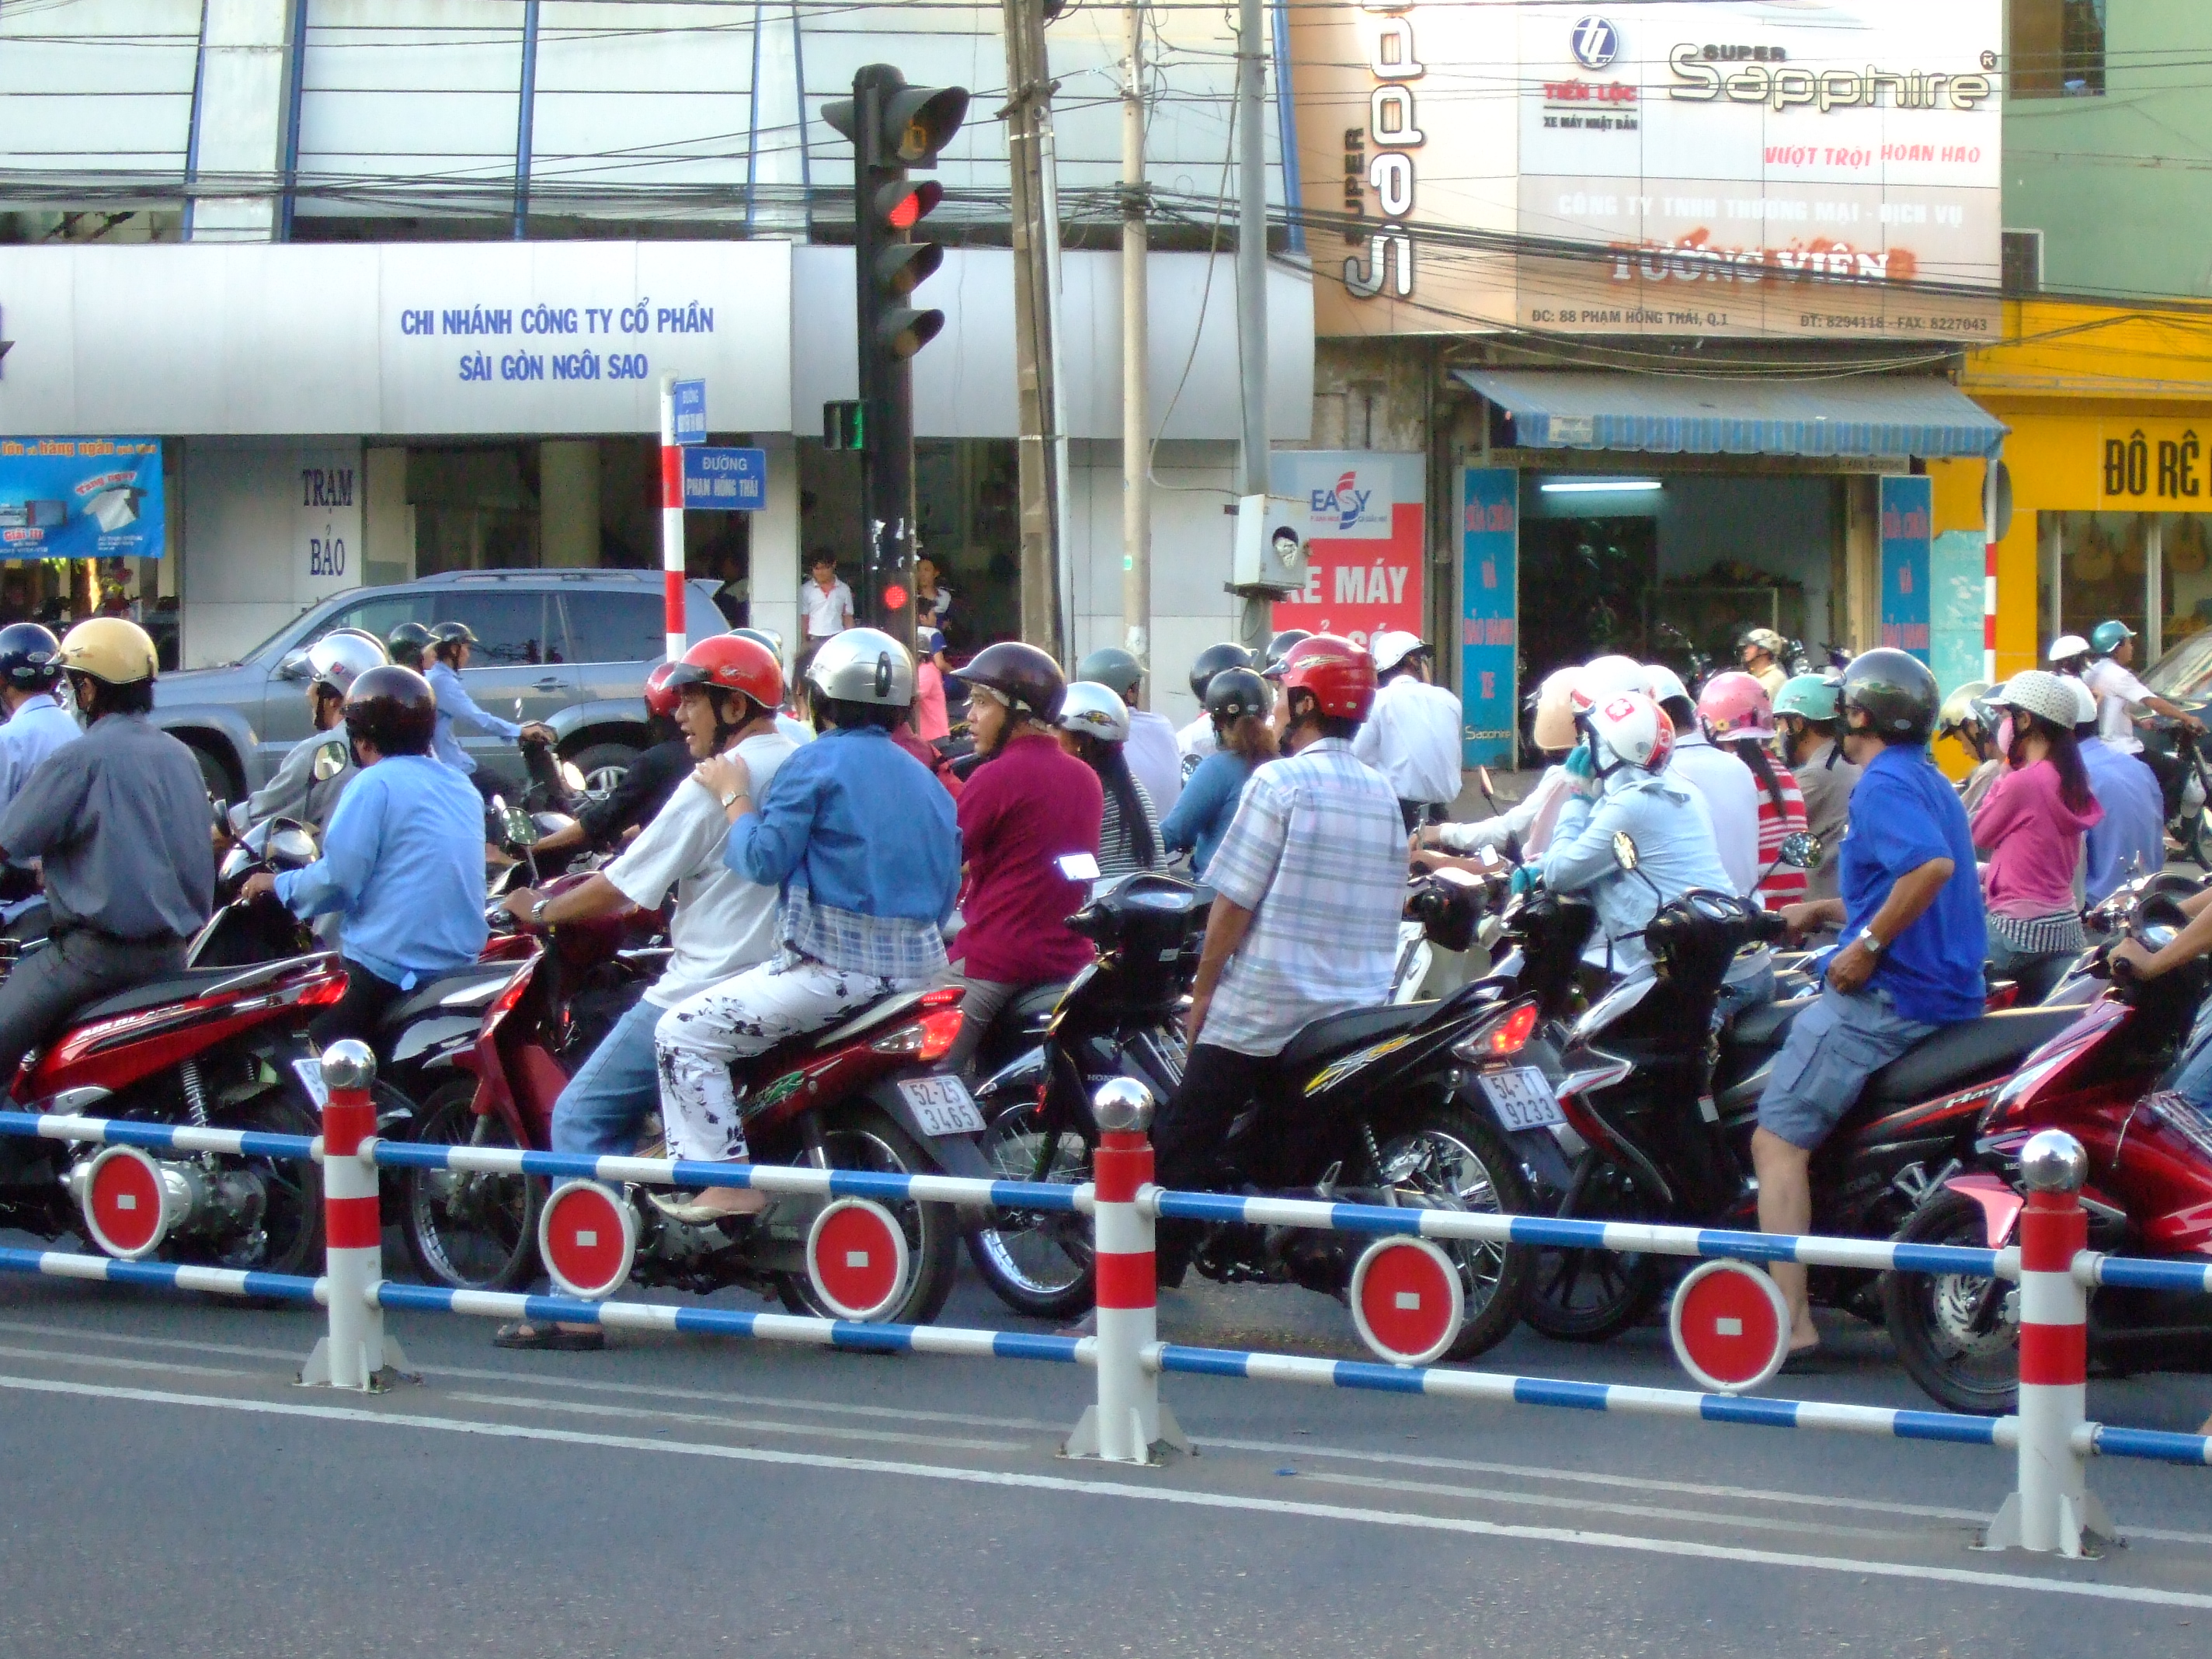 Vietnam Ho Chi Minh City motorbike street scenes Feb 2009 171